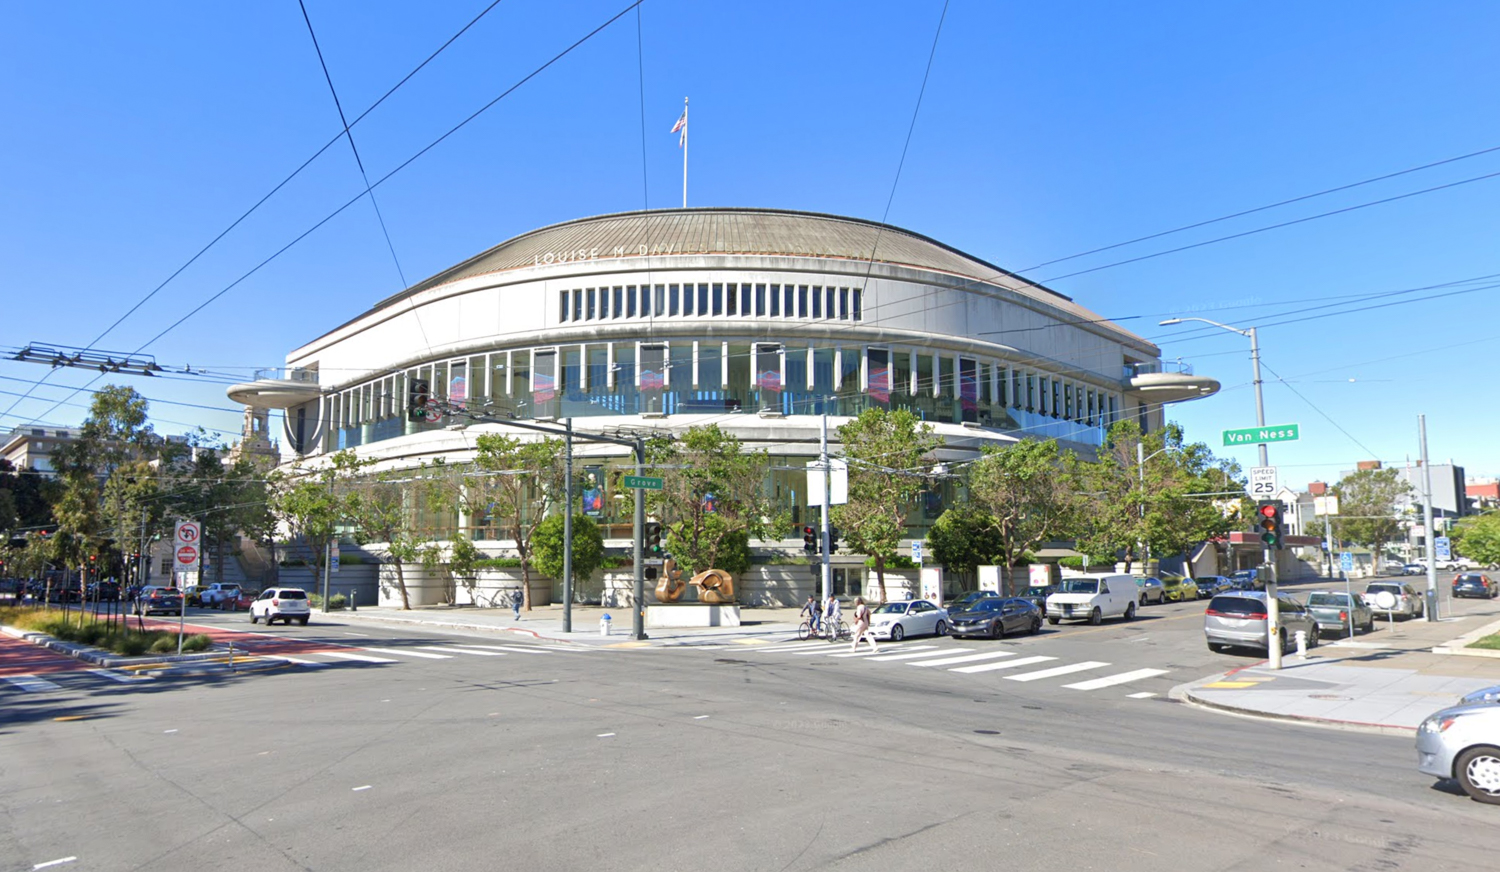 San Francisco Symphony Hall, image by Google Street View